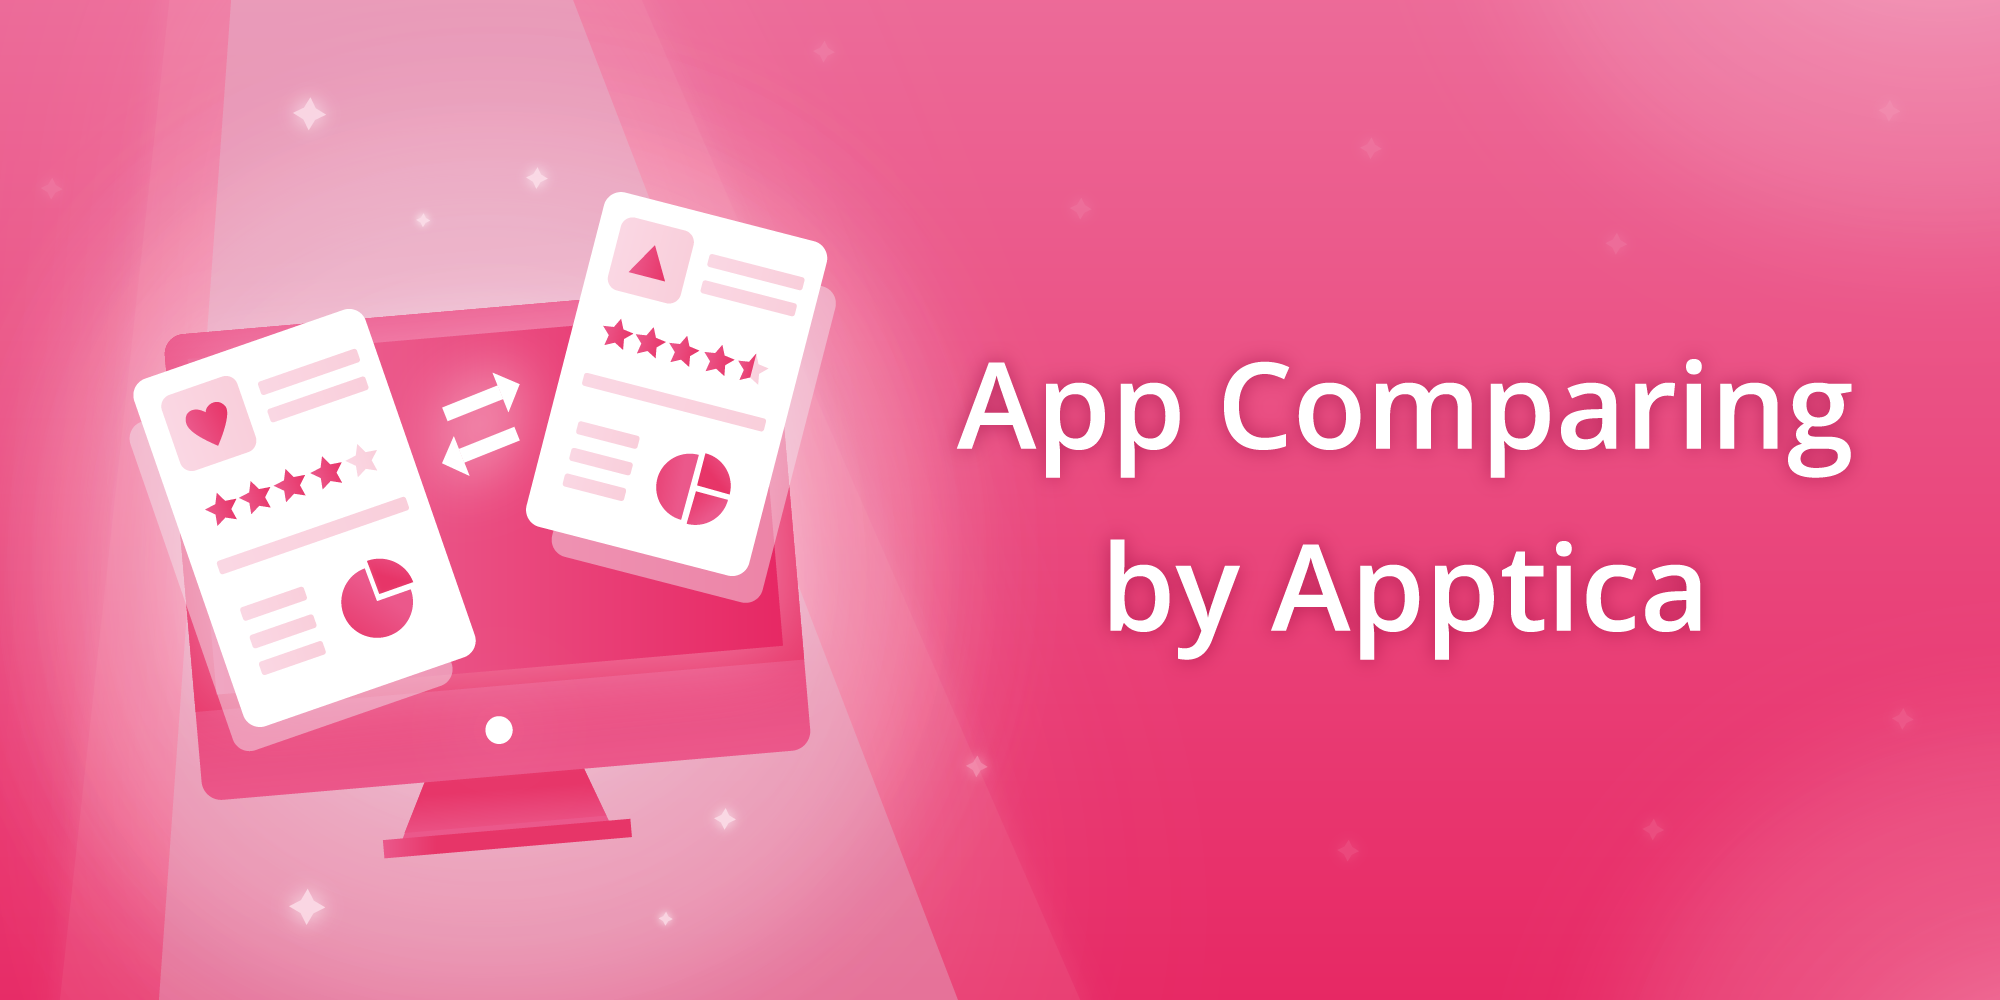 App Comparing by Apptica